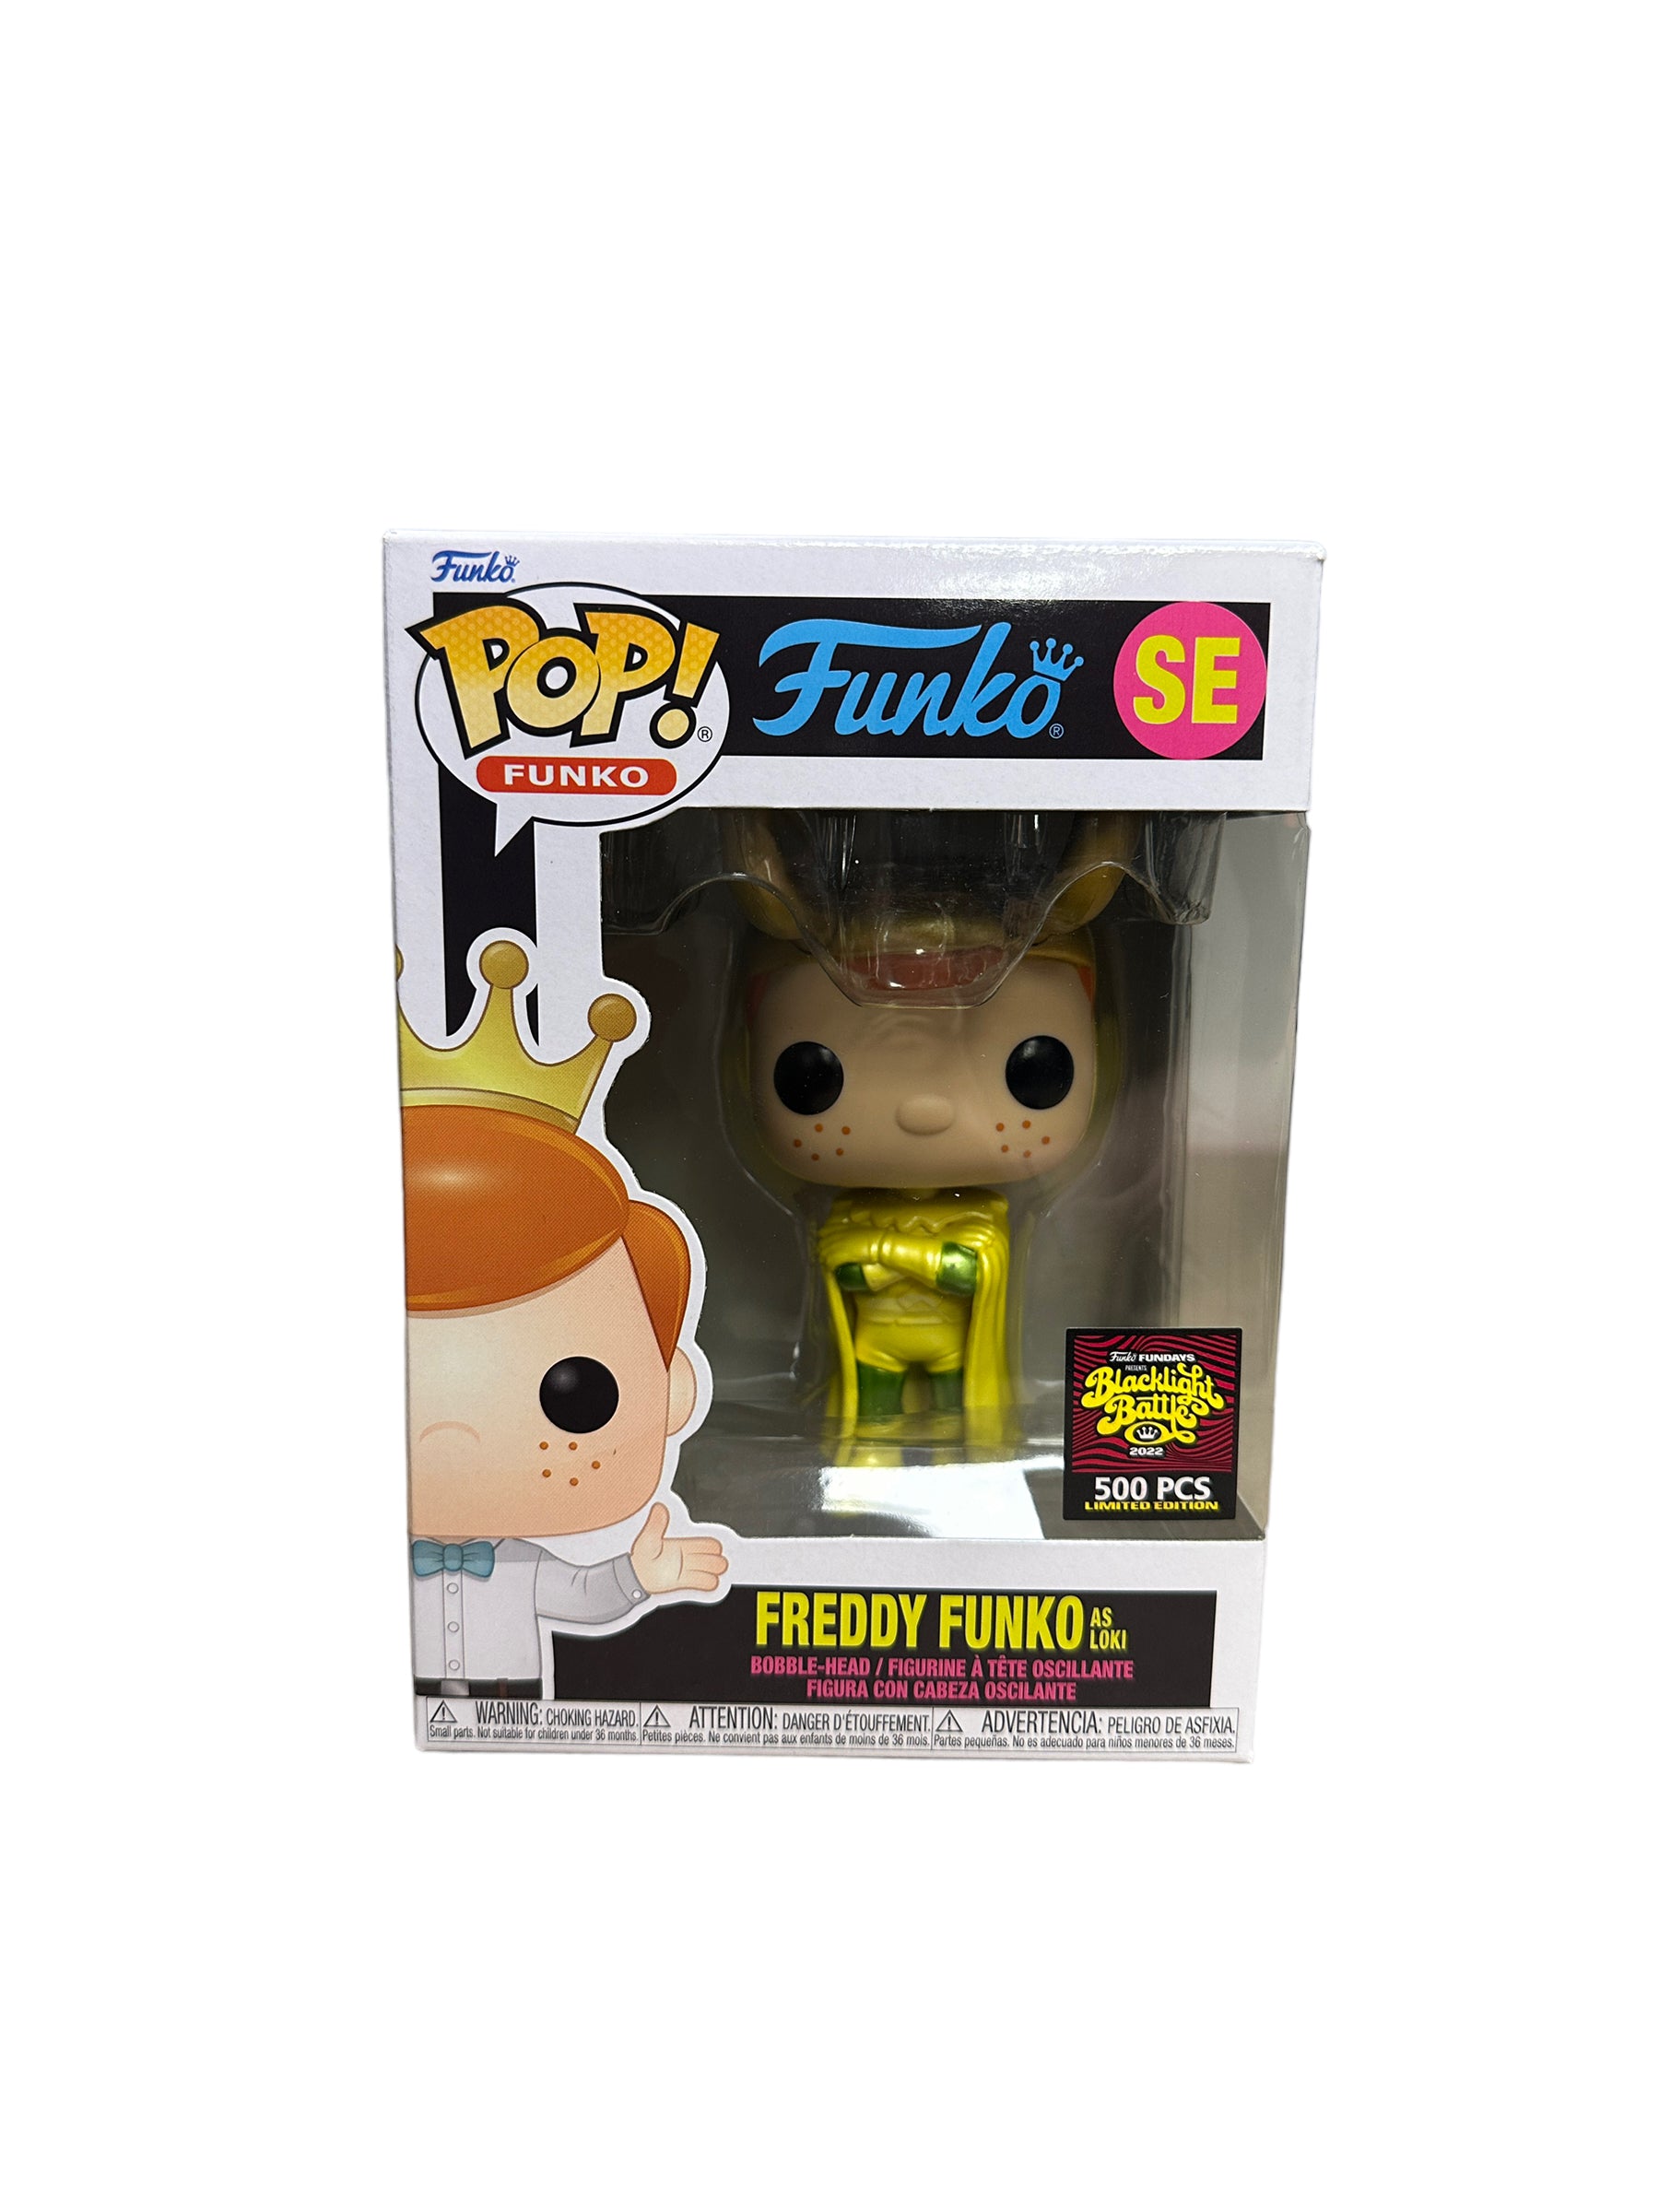 Freddy Funko as Loki (Metallic) Funko Pop! - Marvel - SDCC 2022 Box of Fun Exclusive LE500 Pcs - Condition 8.75/10